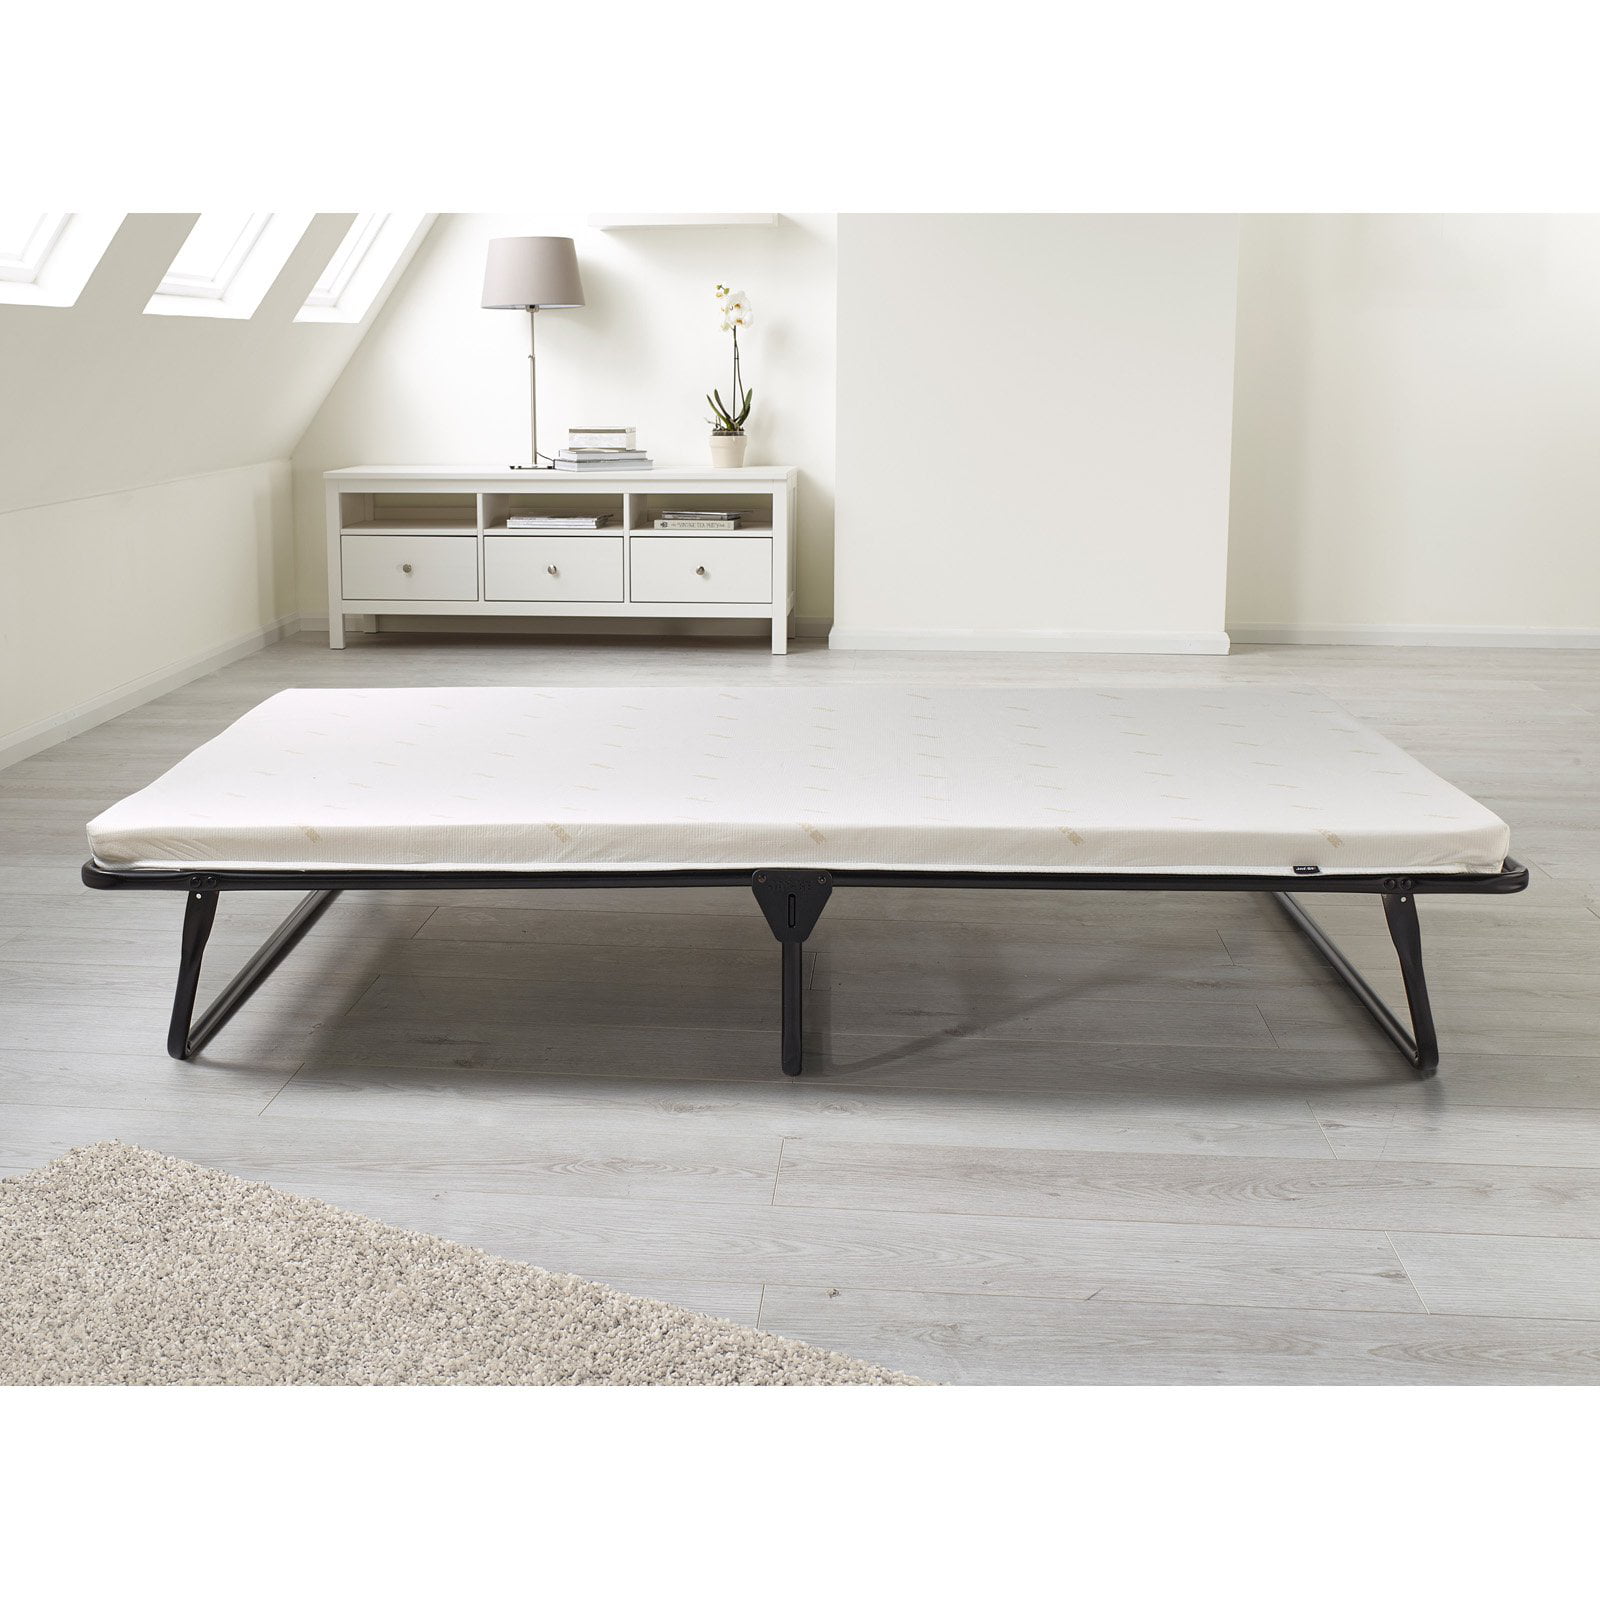 Jay-Be Saver Folding Bed With Airflow Mattress Regular Black/White 